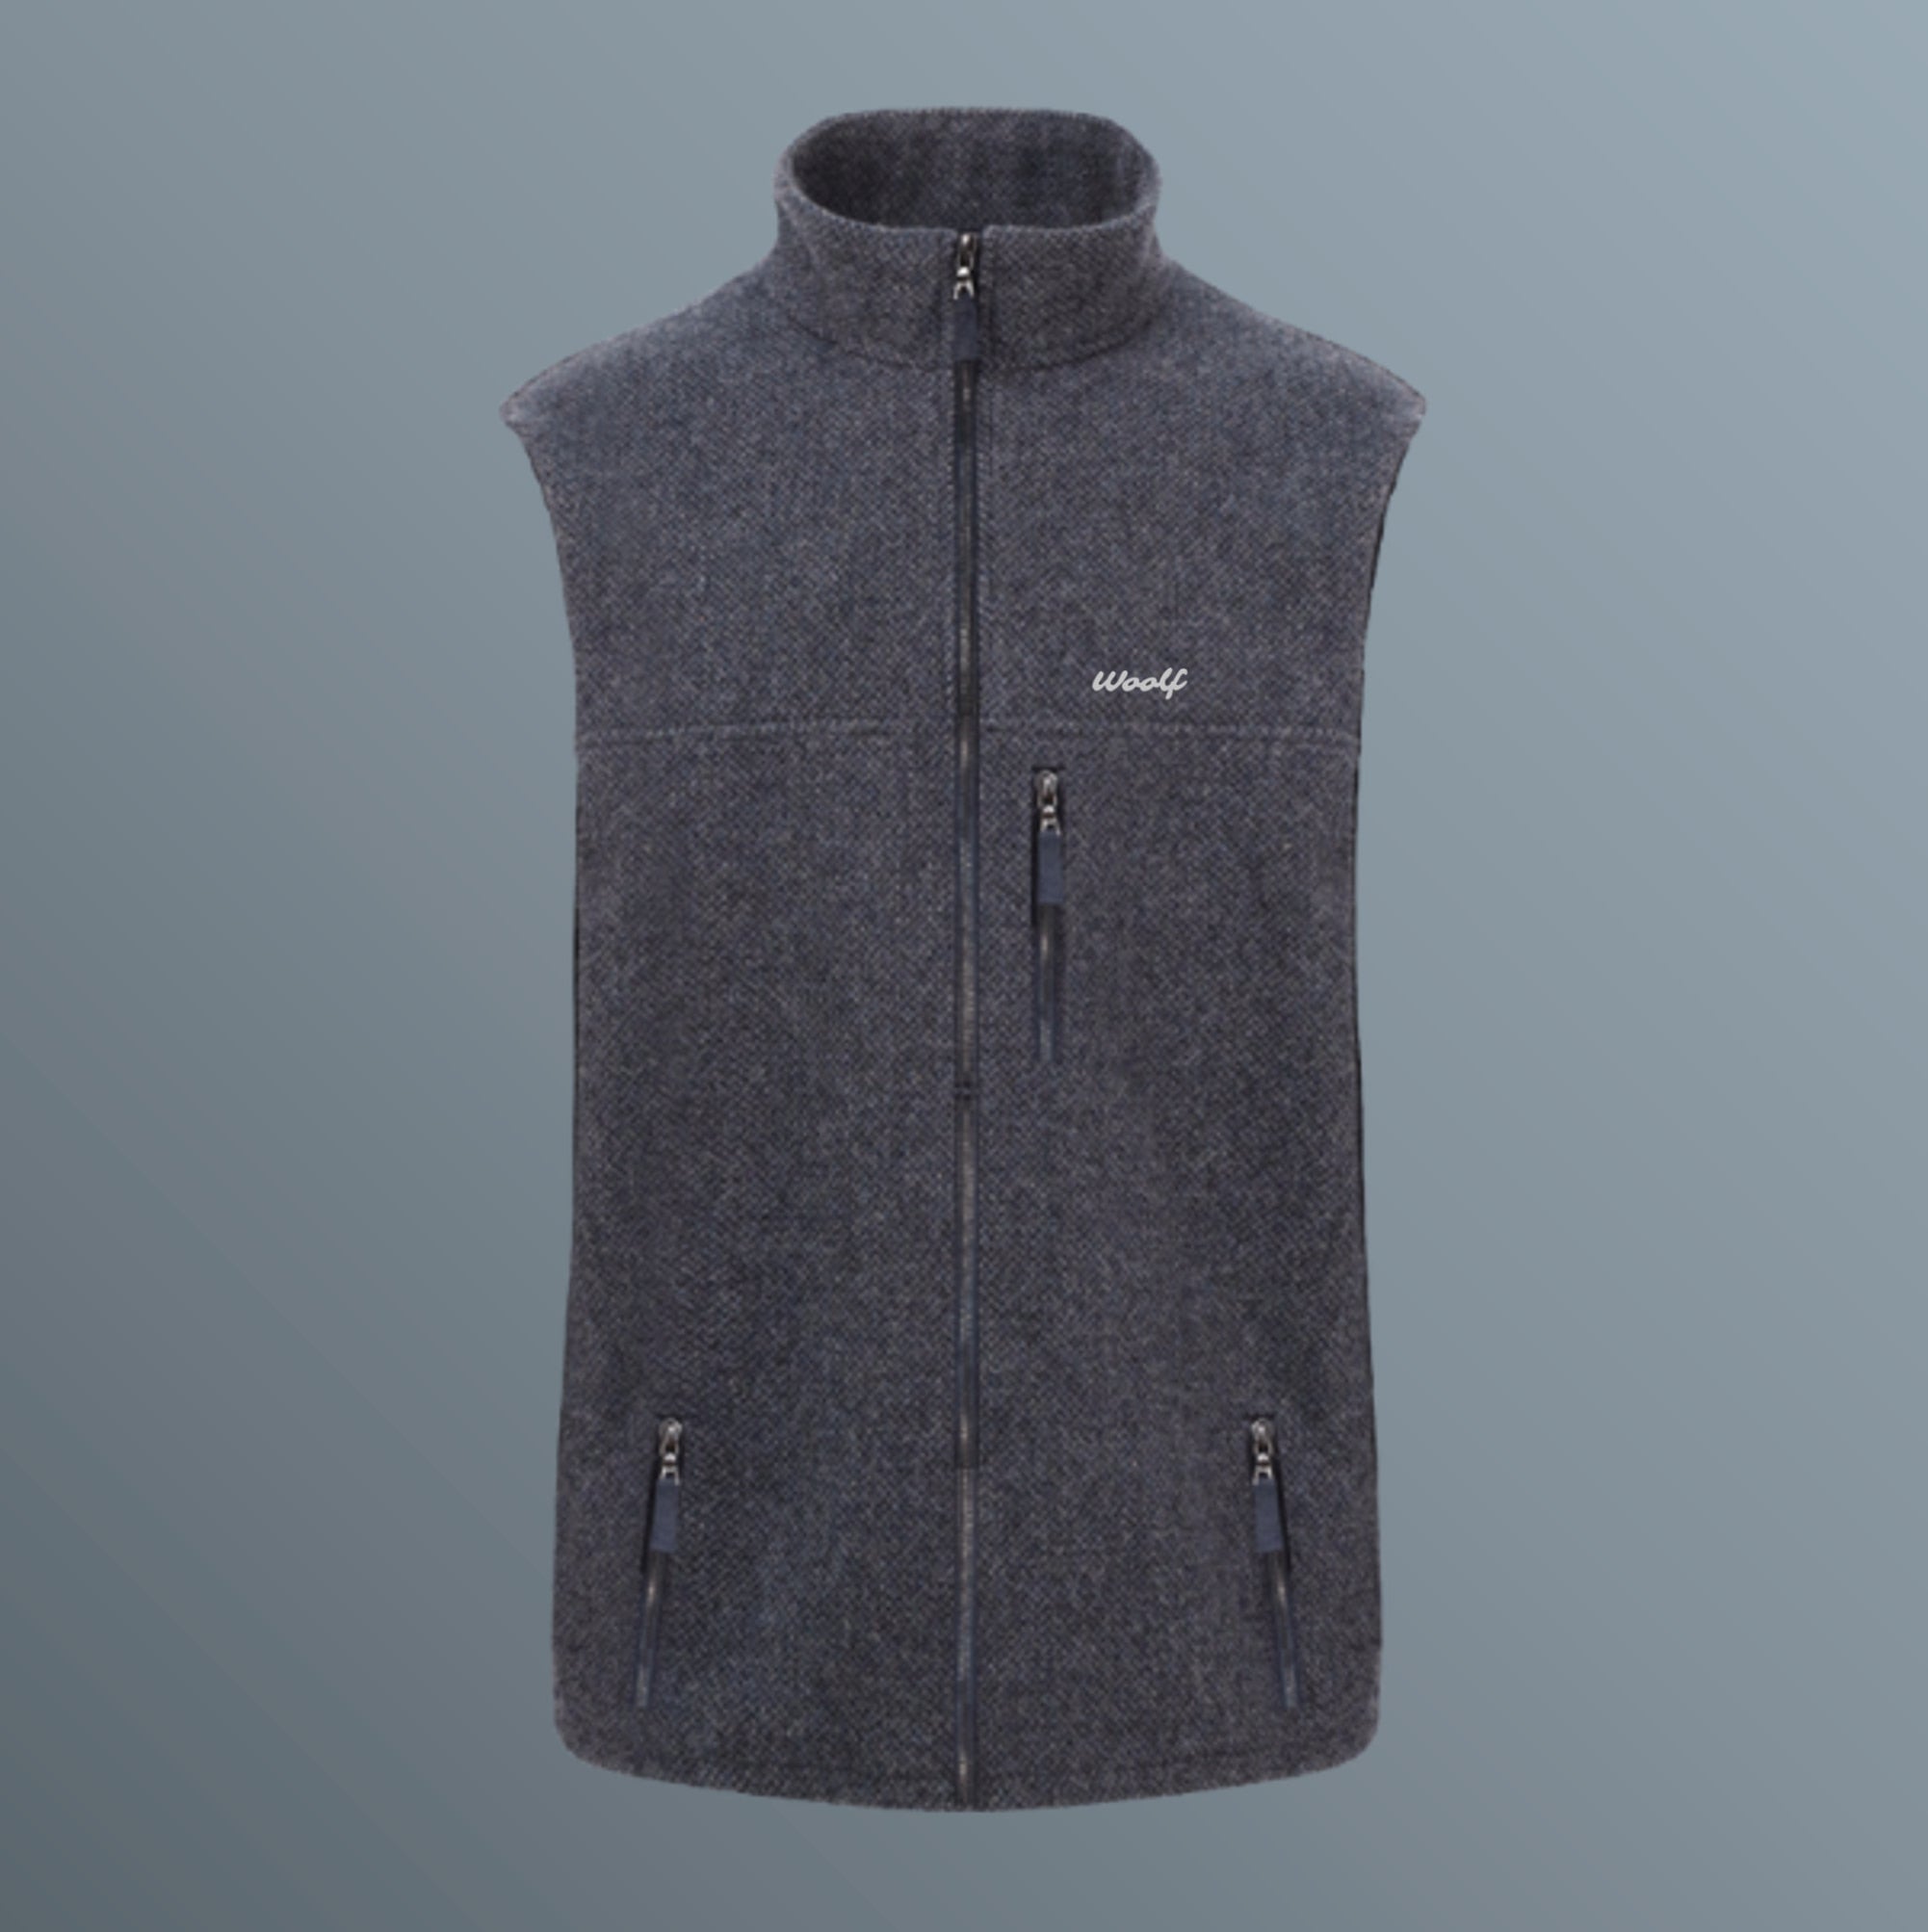 Men's PureFleece 100% Merino Fleece mid layer Gilet Vest . Created with our unique weave for superior performance over knitted merino fleece tops.